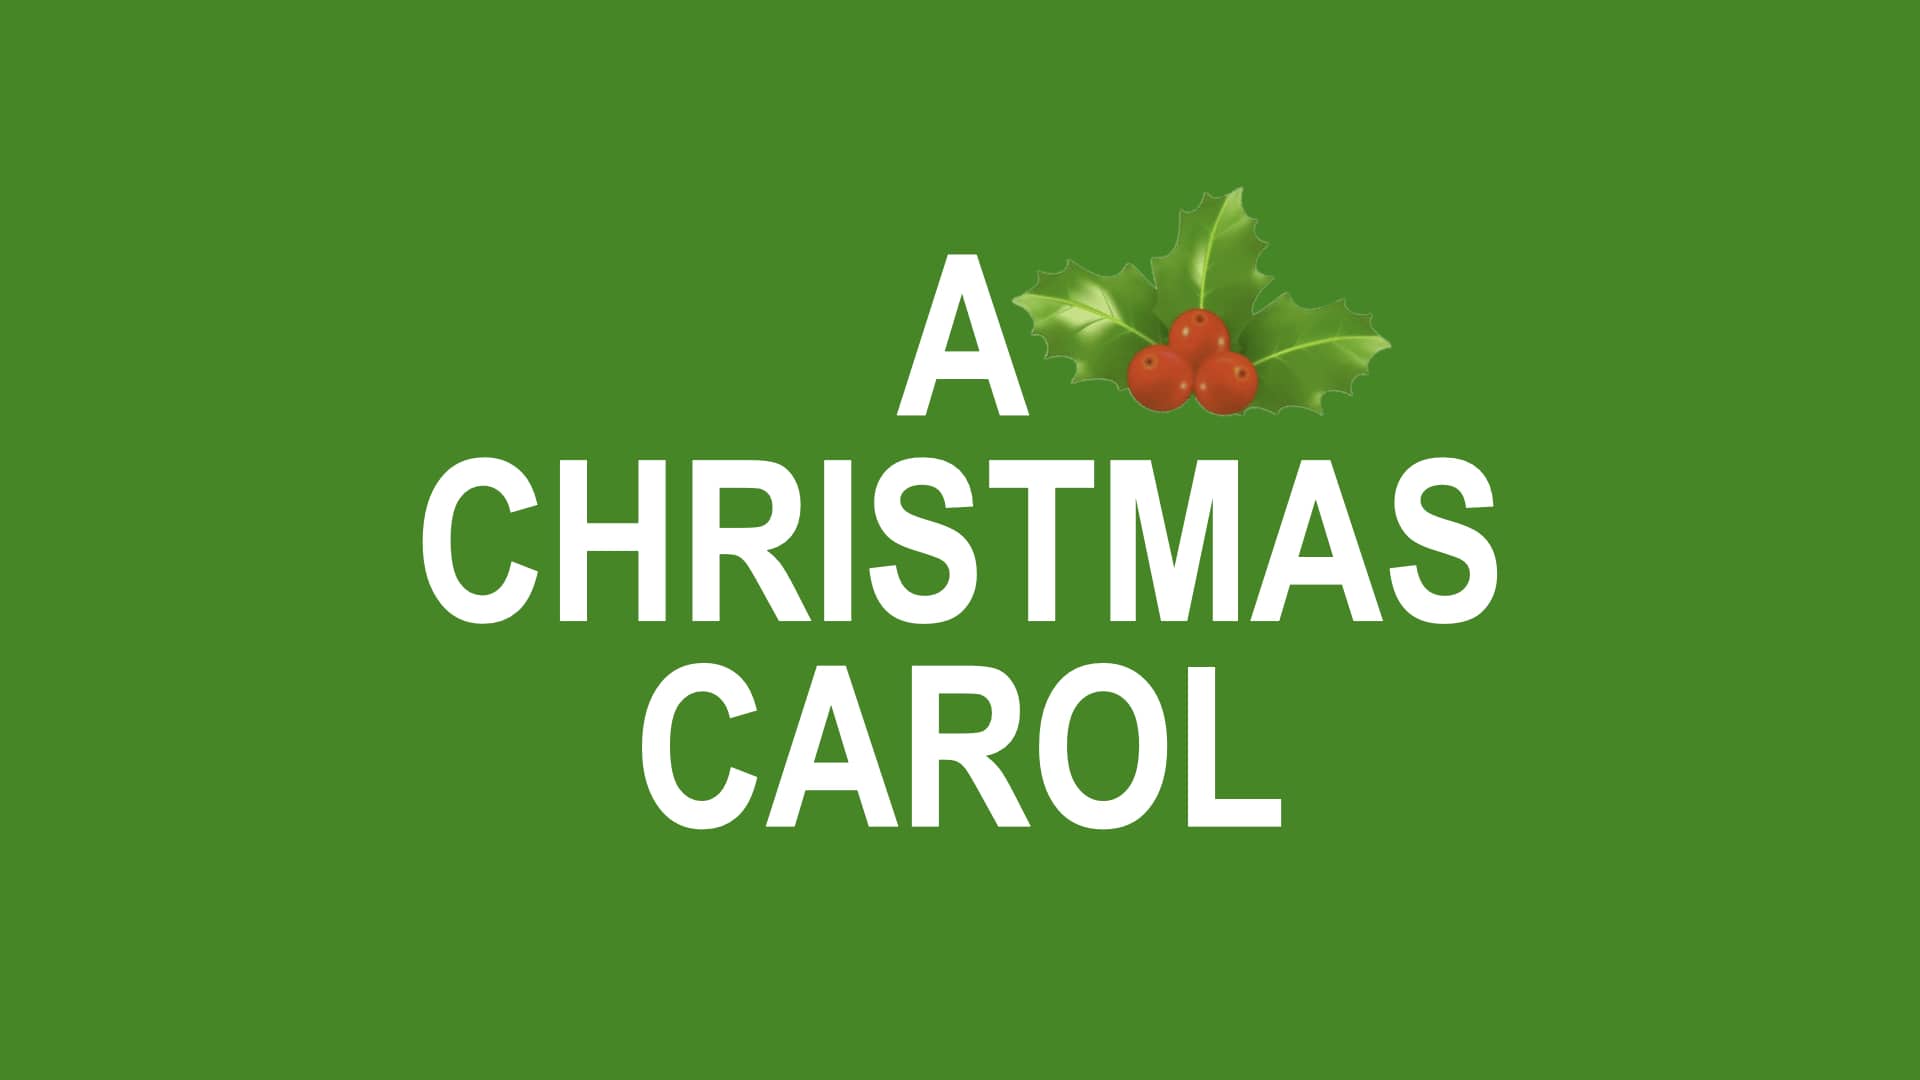 CHARLES DICKENS’ A CHRISTMAS CAROL